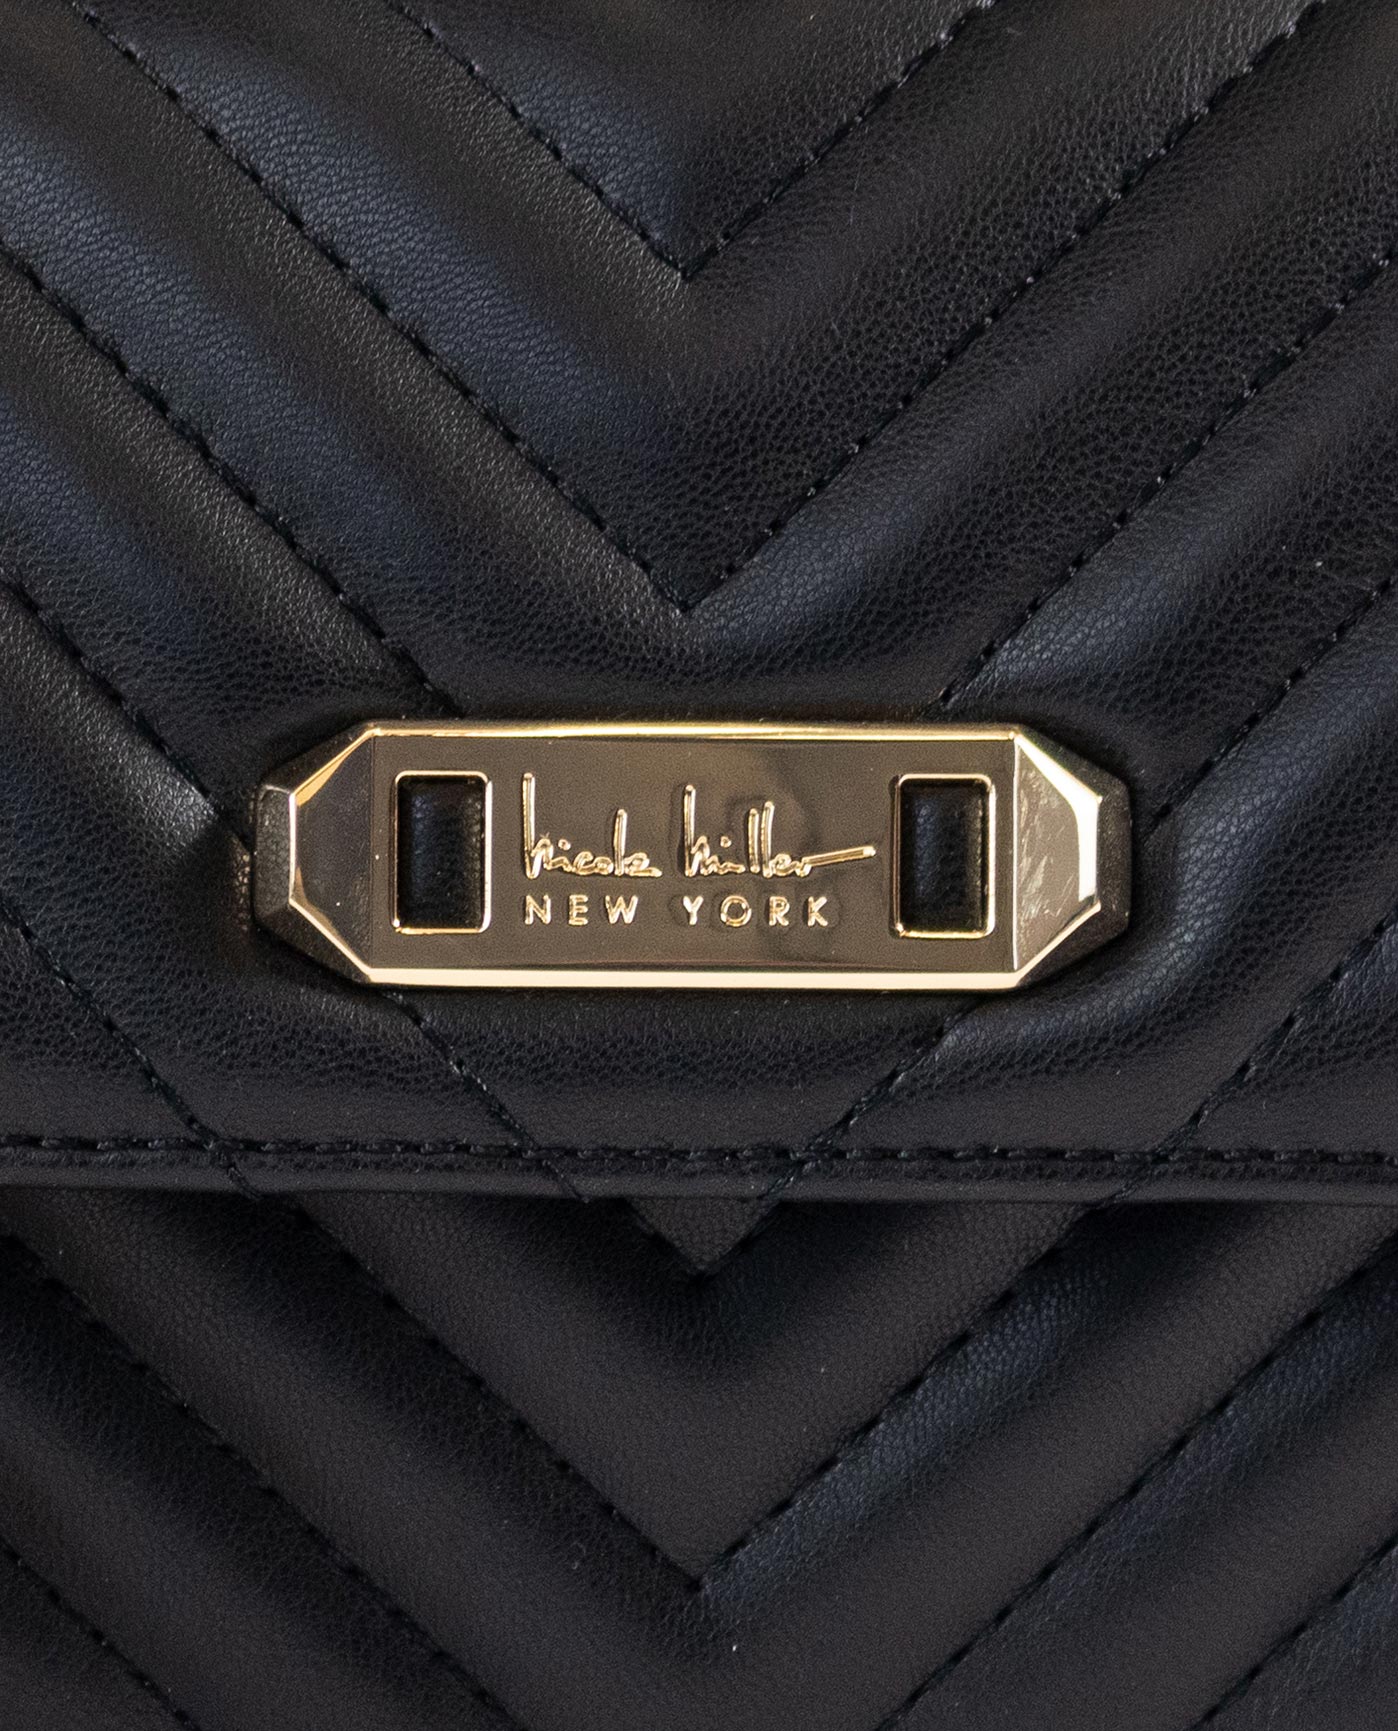 Nicole Miller New York Designer Travel Duffel Handbag Collection -  Oversized 22 Inch Carry On for Women - Weekender Overnight Shoulder Tote  Box Bag (Rosalie Silver): Buy Online at Best Price in